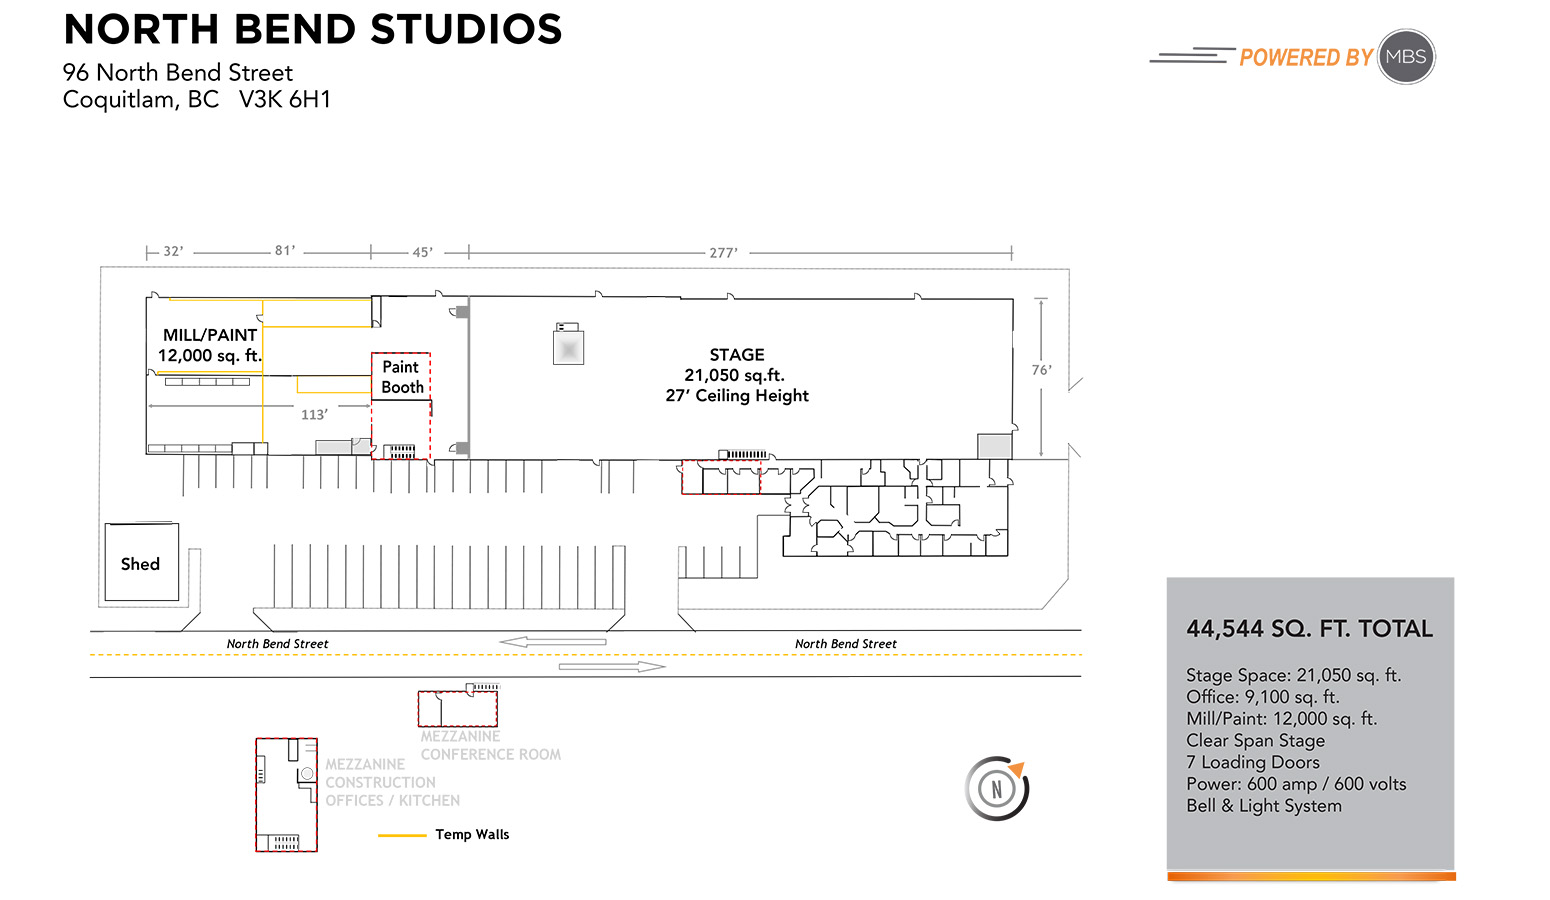 North Bend Studio Floorplan - MBS Group